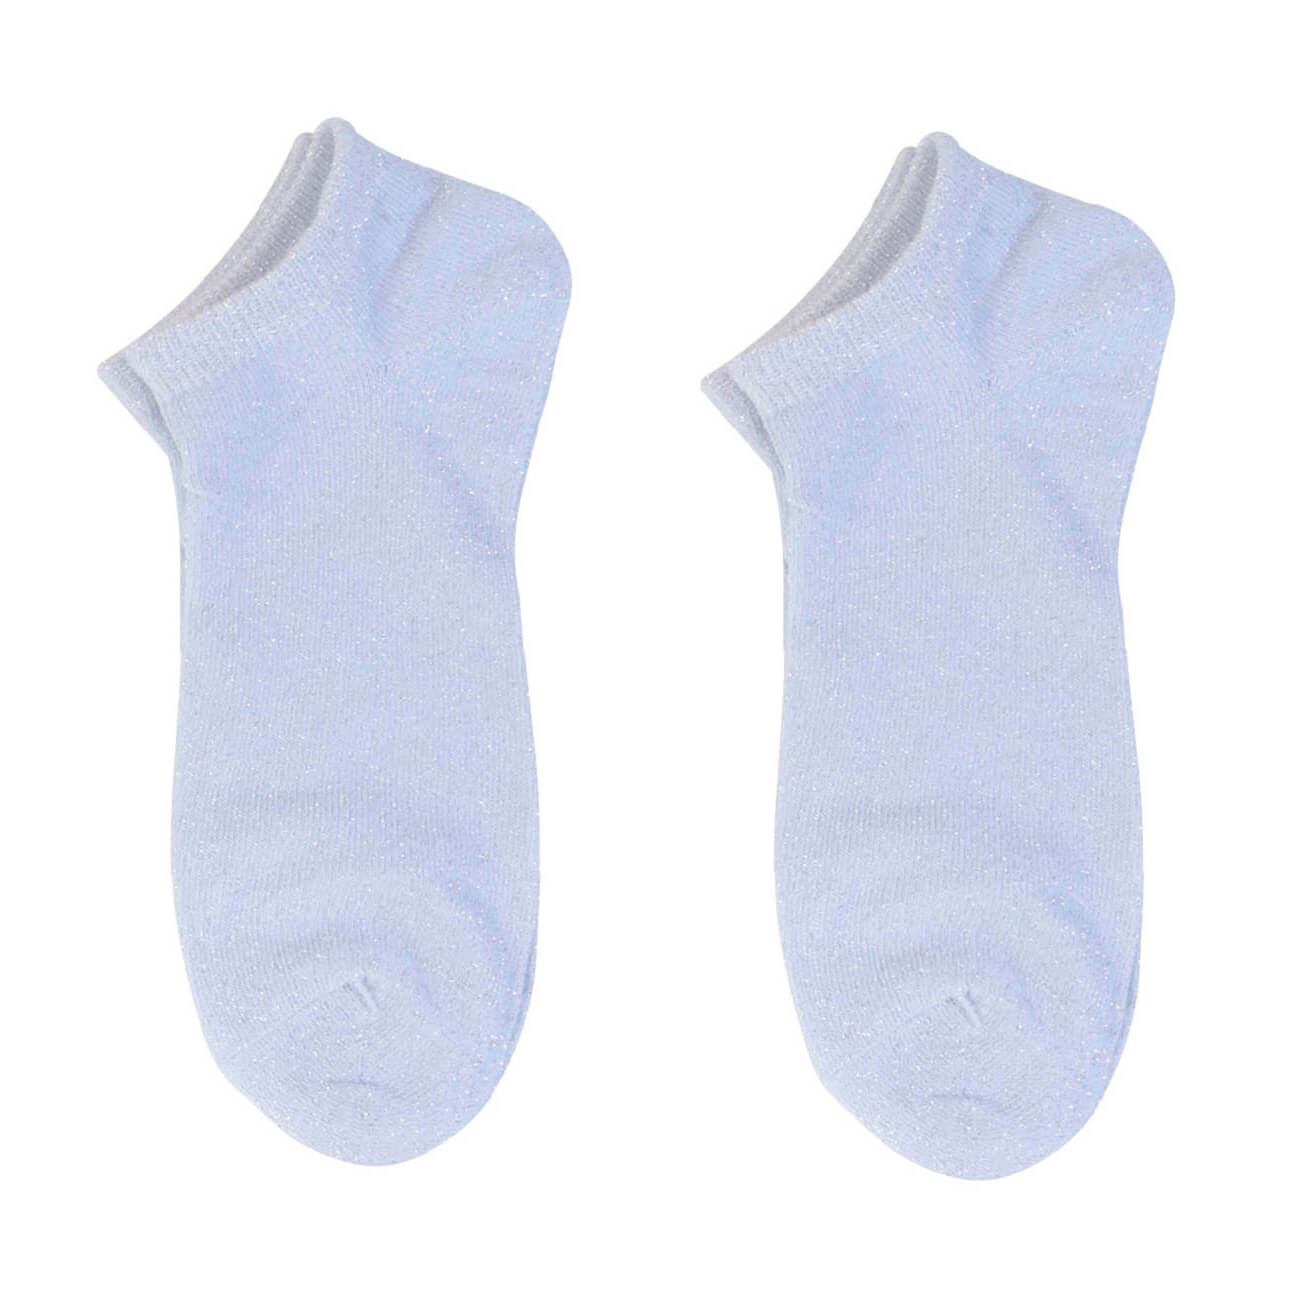 Носки женские, р. 39-41, хлопок/полиэстер, белые, Glint носки следки женские р 36 38 хлопок полиэстер белые basic